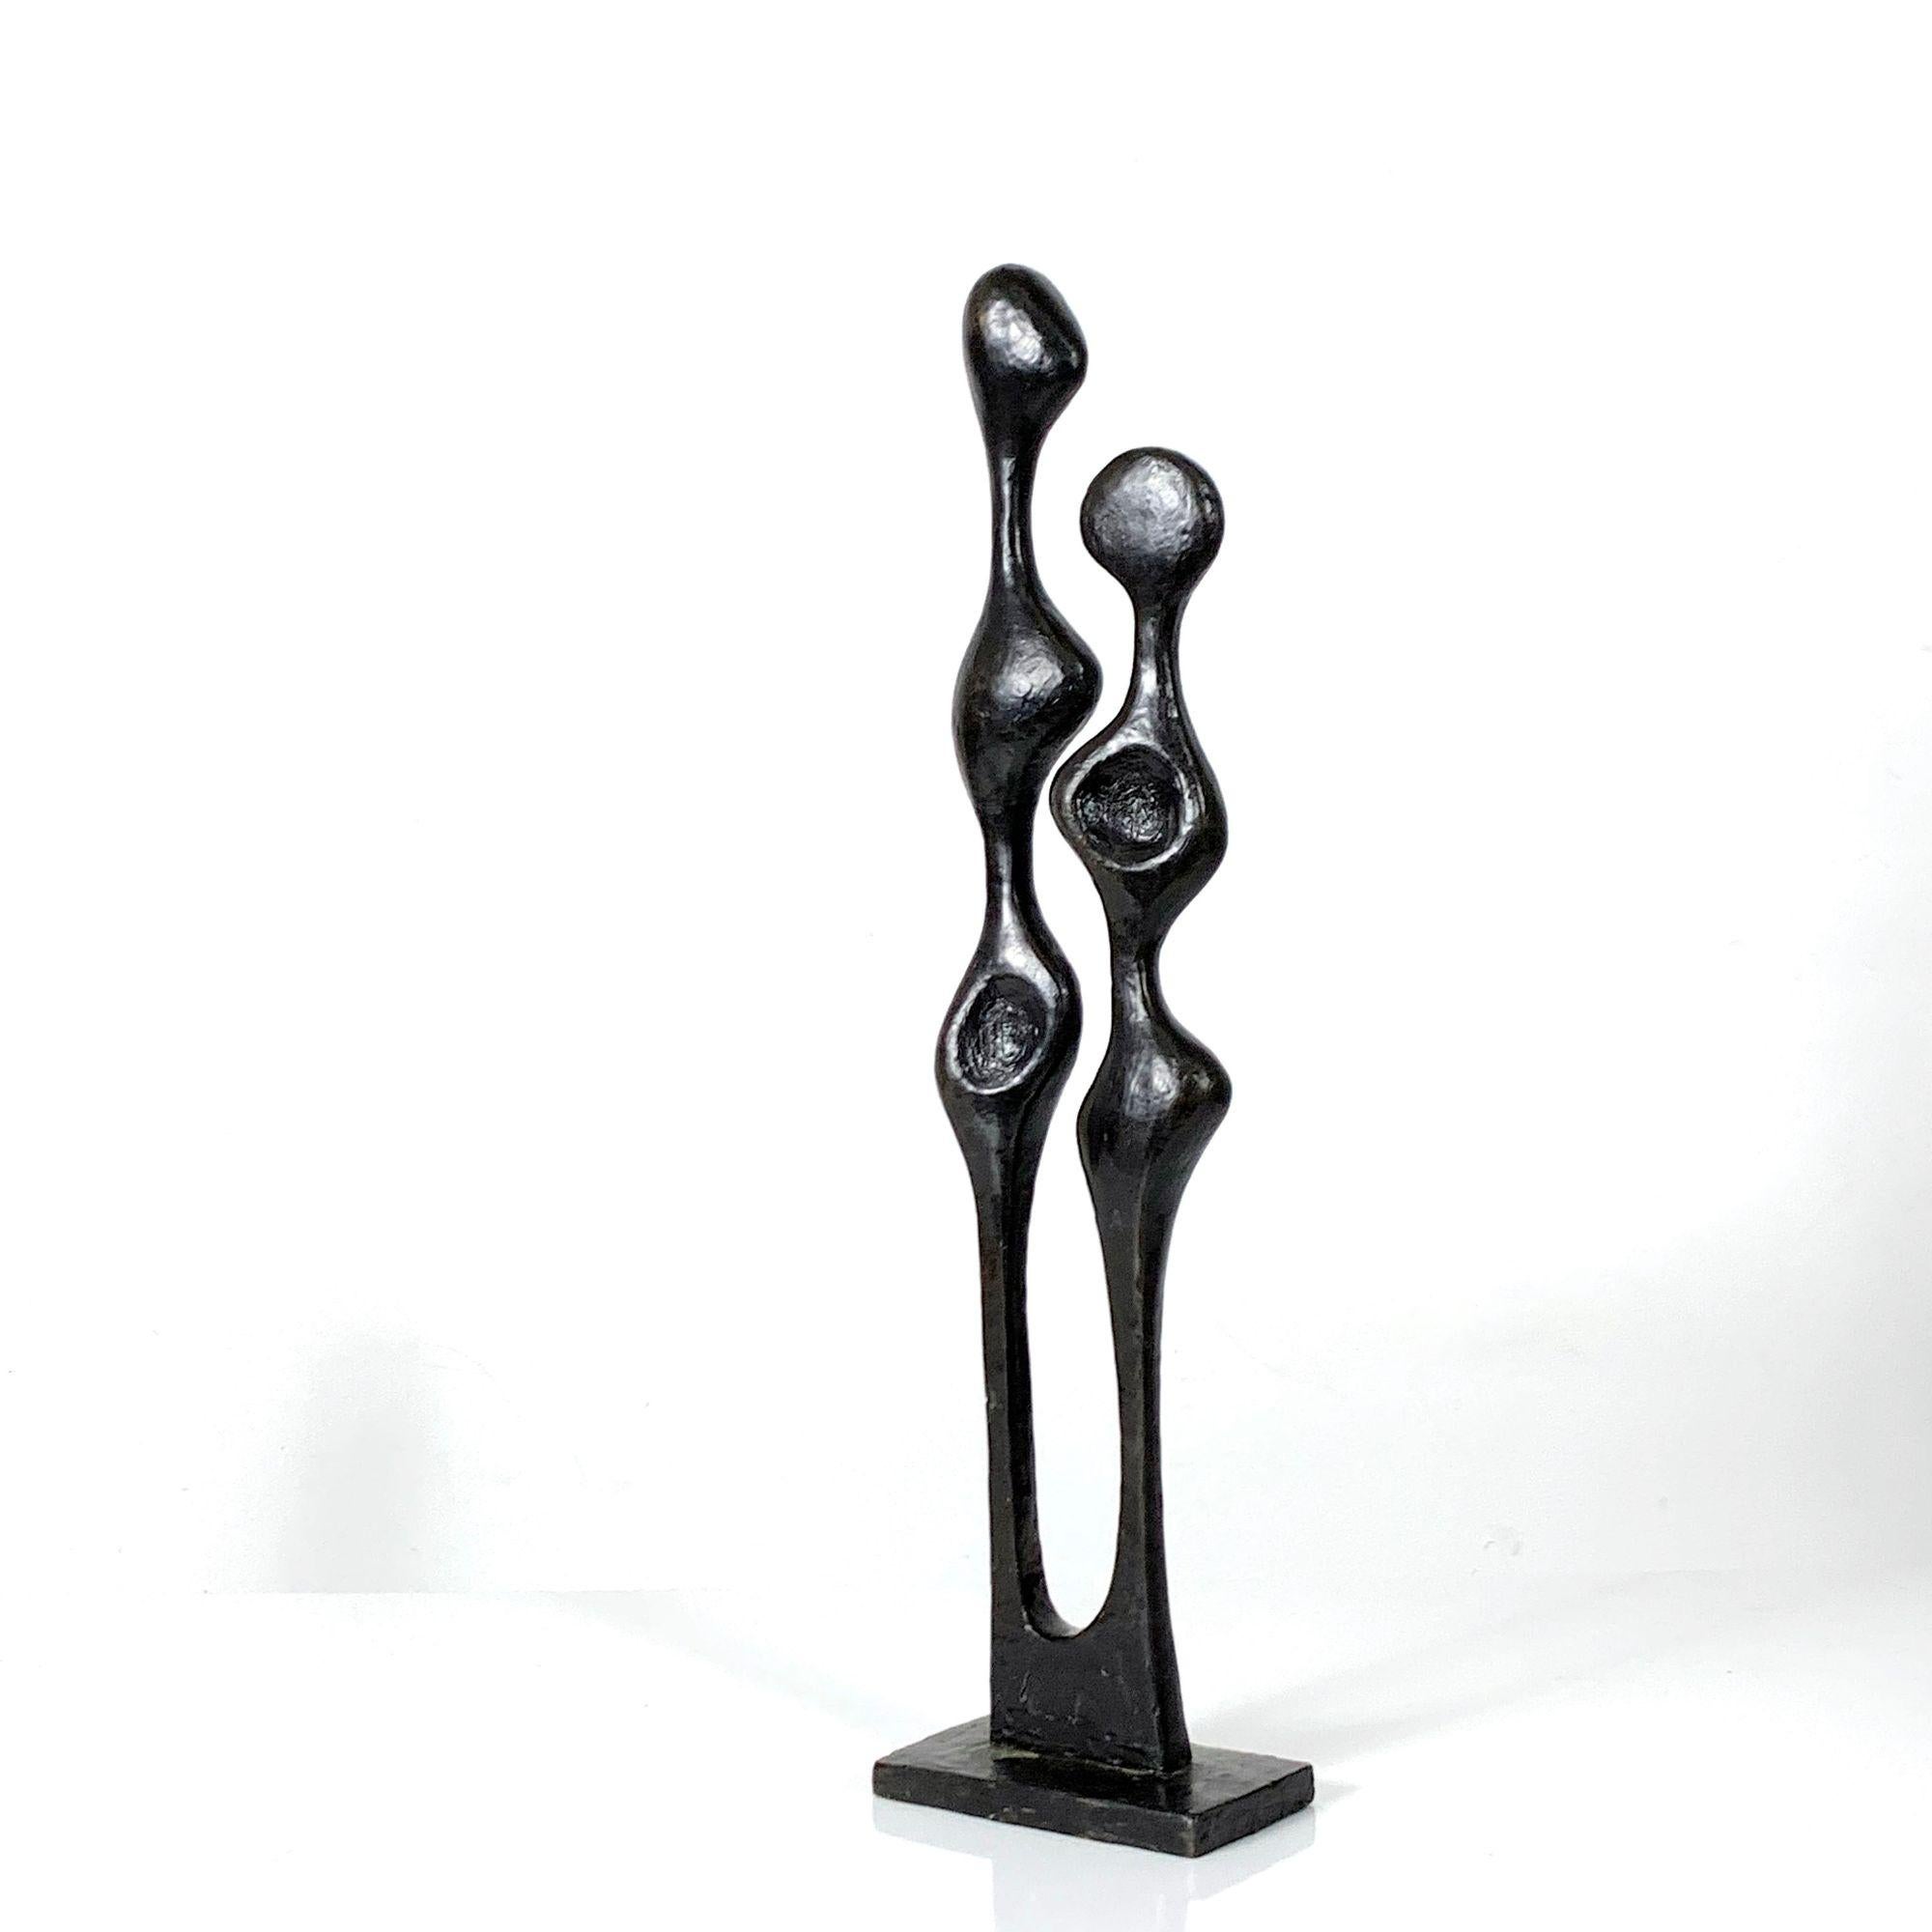 Escultura figurativa abstracta alta de bronce modernista de mediados de siglo, hacia 1970 Moderno de mediados de siglo en venta